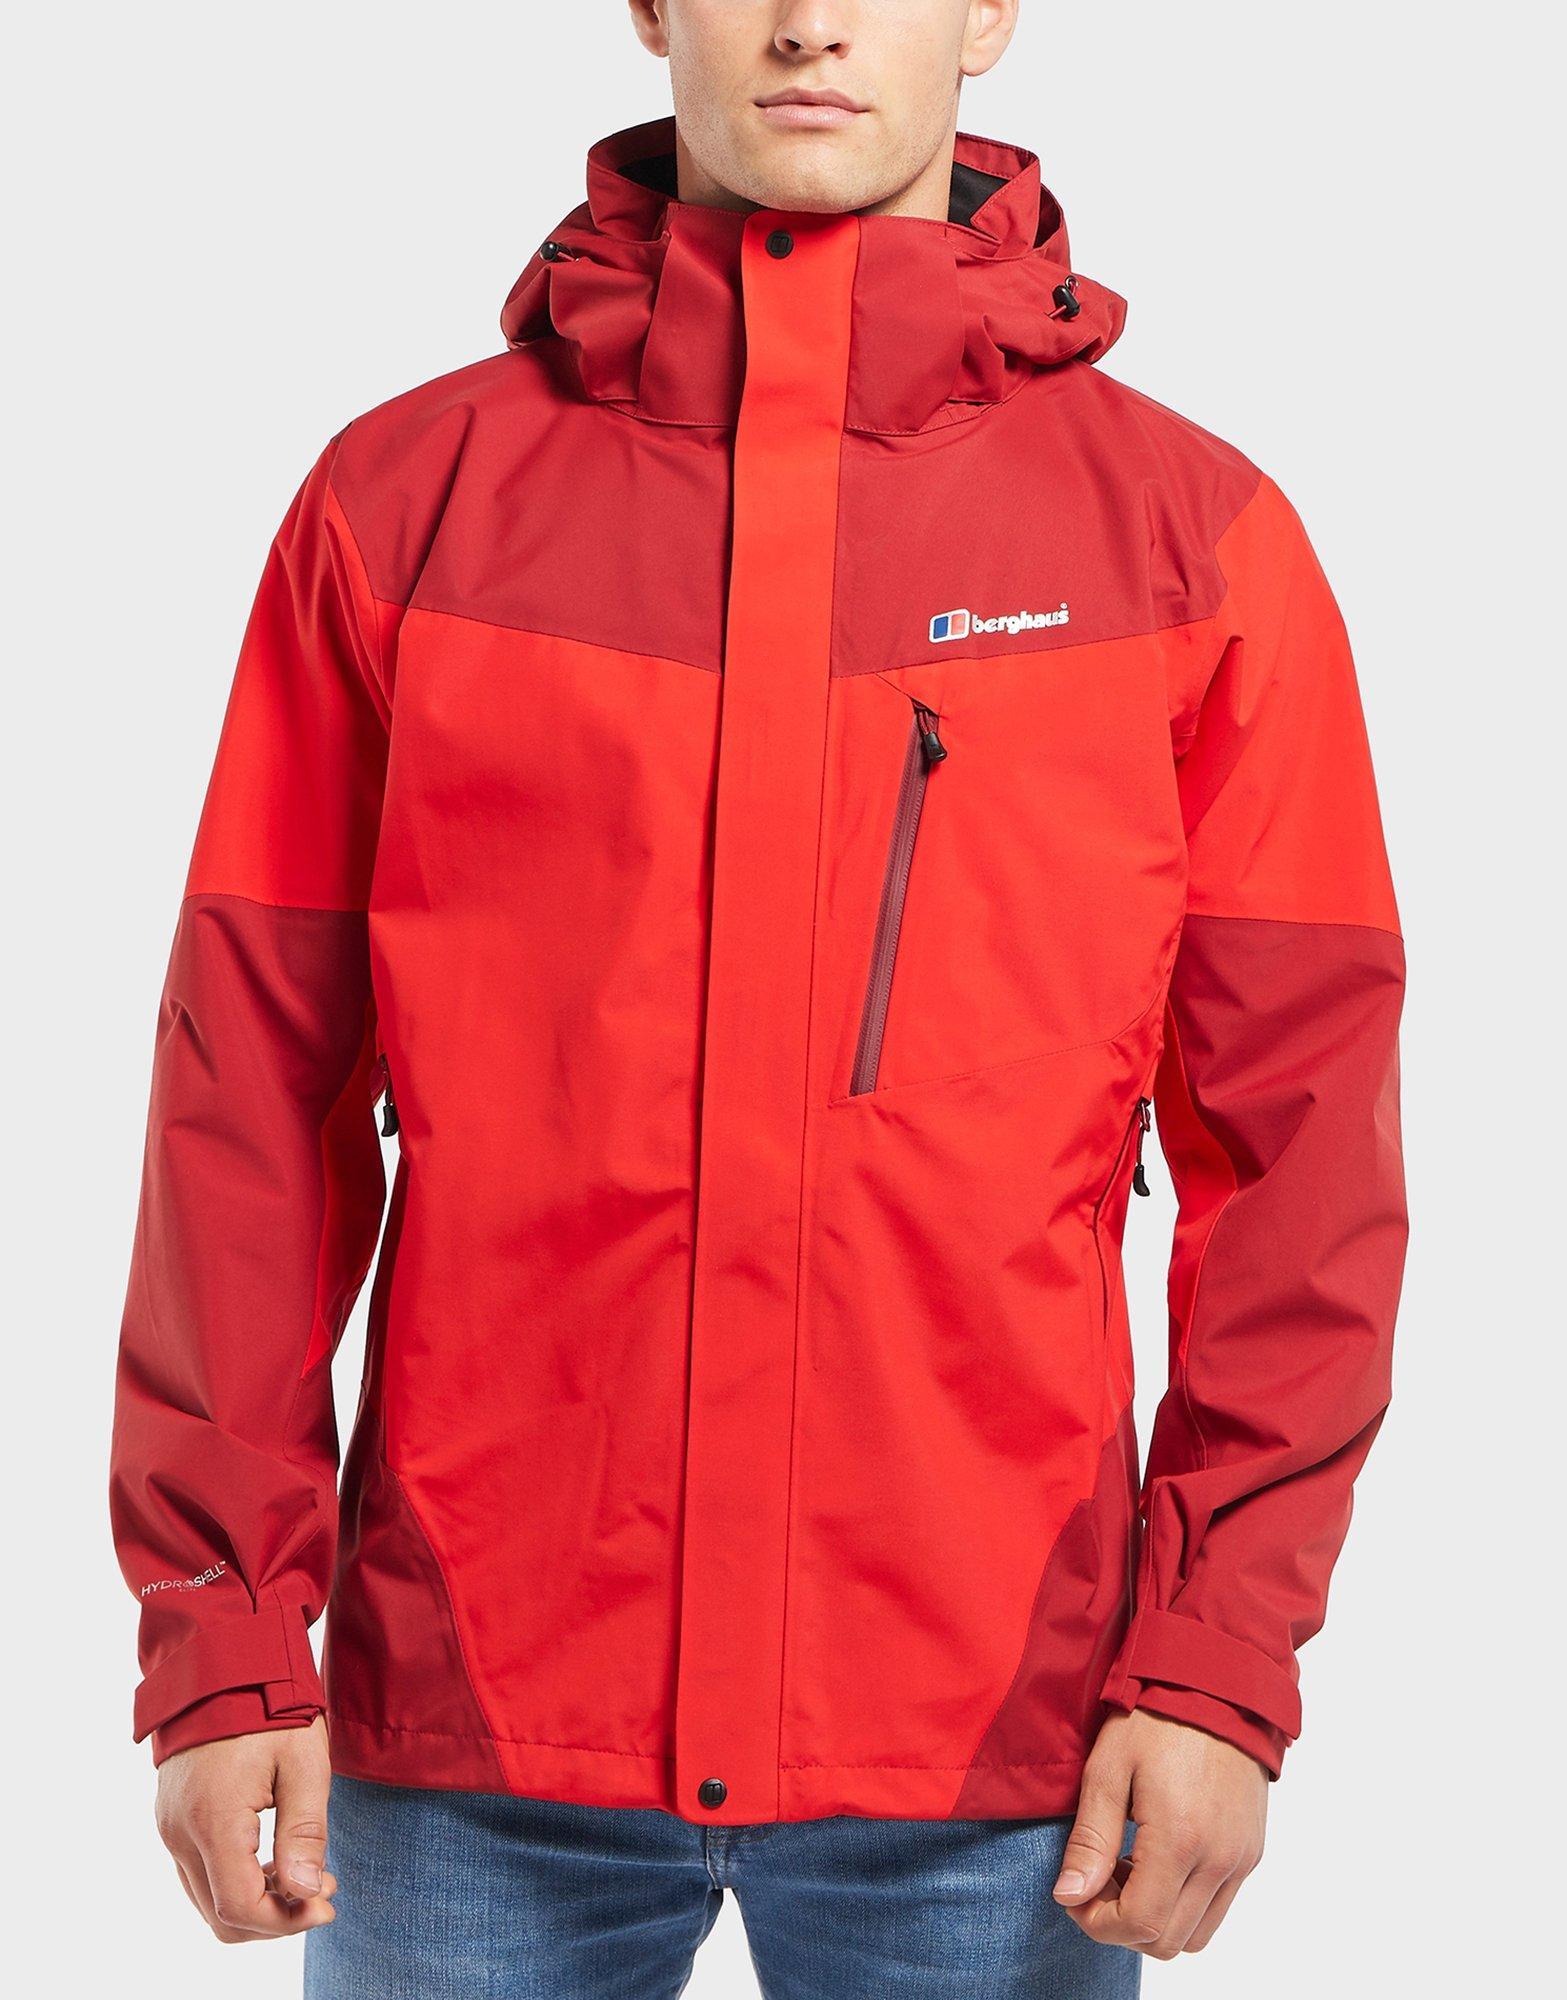 Berghaus Men's Arran Waterproof Jacket Store, SAVE 30% -  threehouselawfirm.com